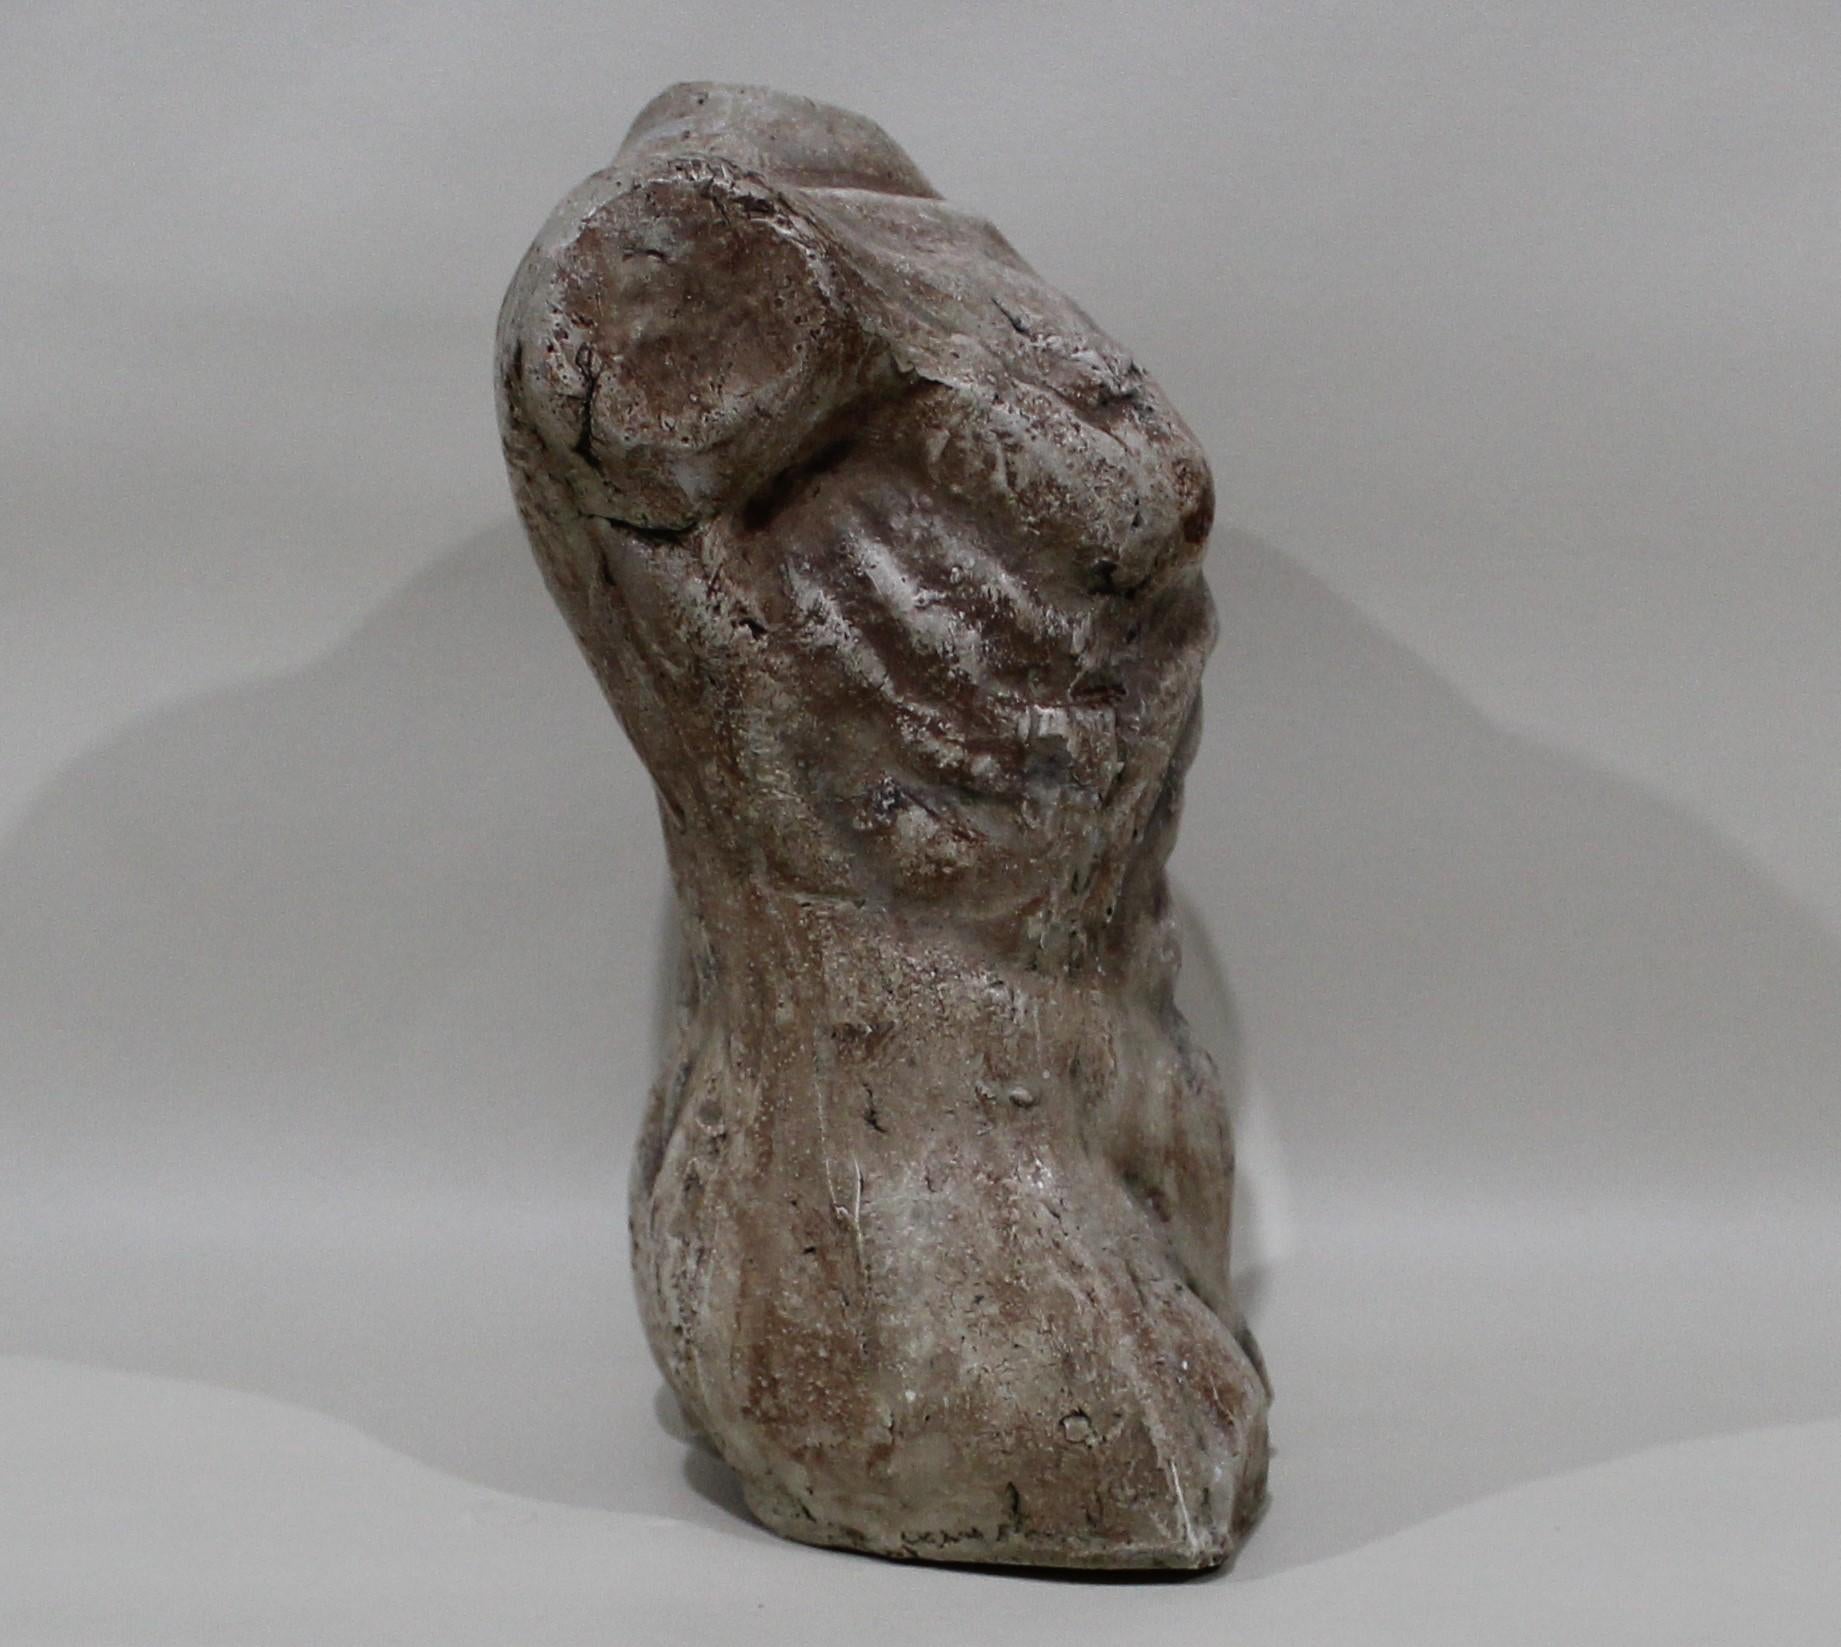 male torso sculpture for sale